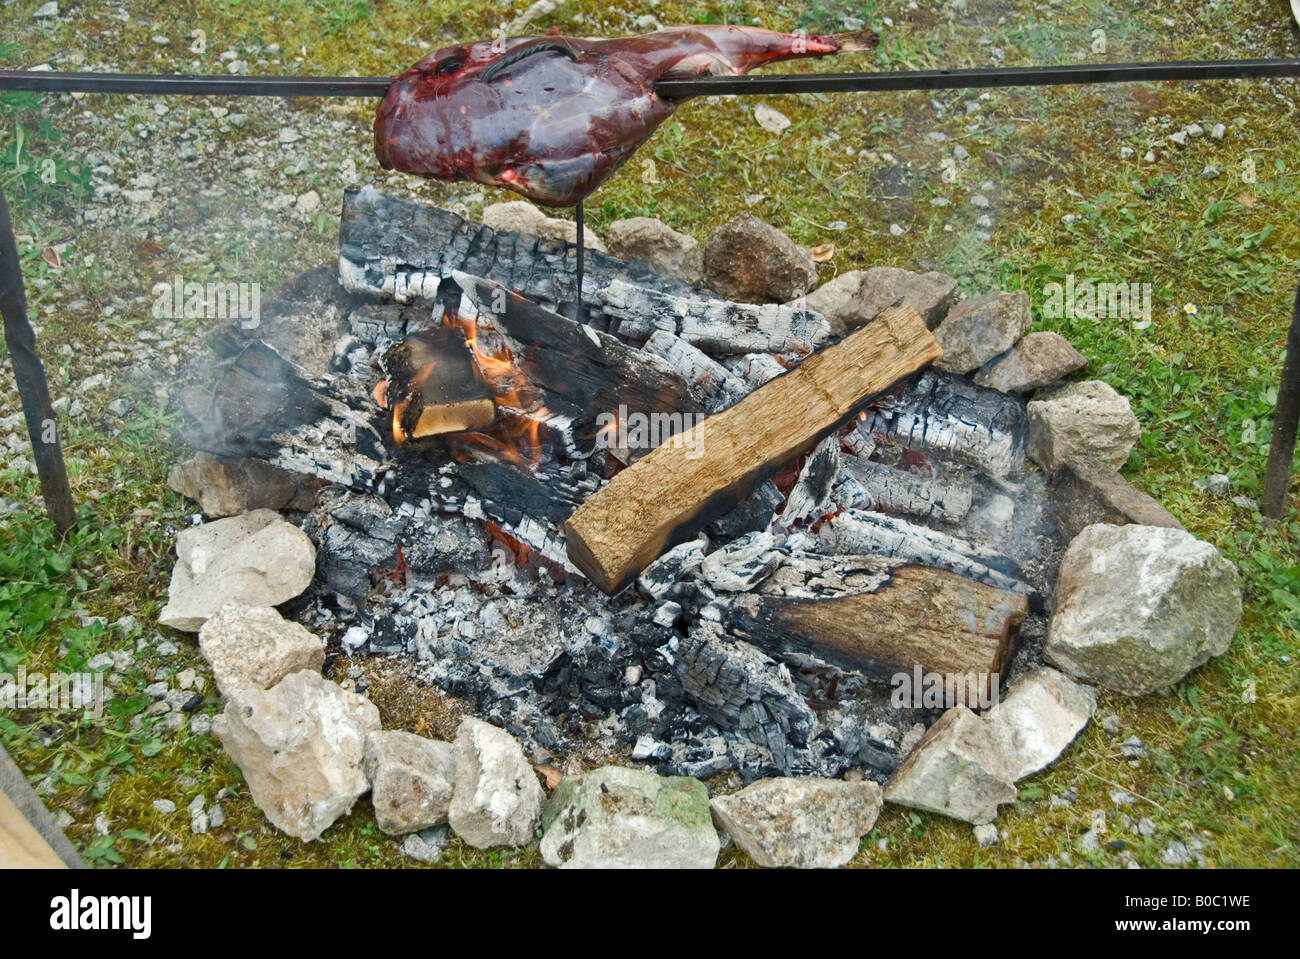 Carne fogata cocinar fuego fotografías e imágenes de alta resolución - Alamy